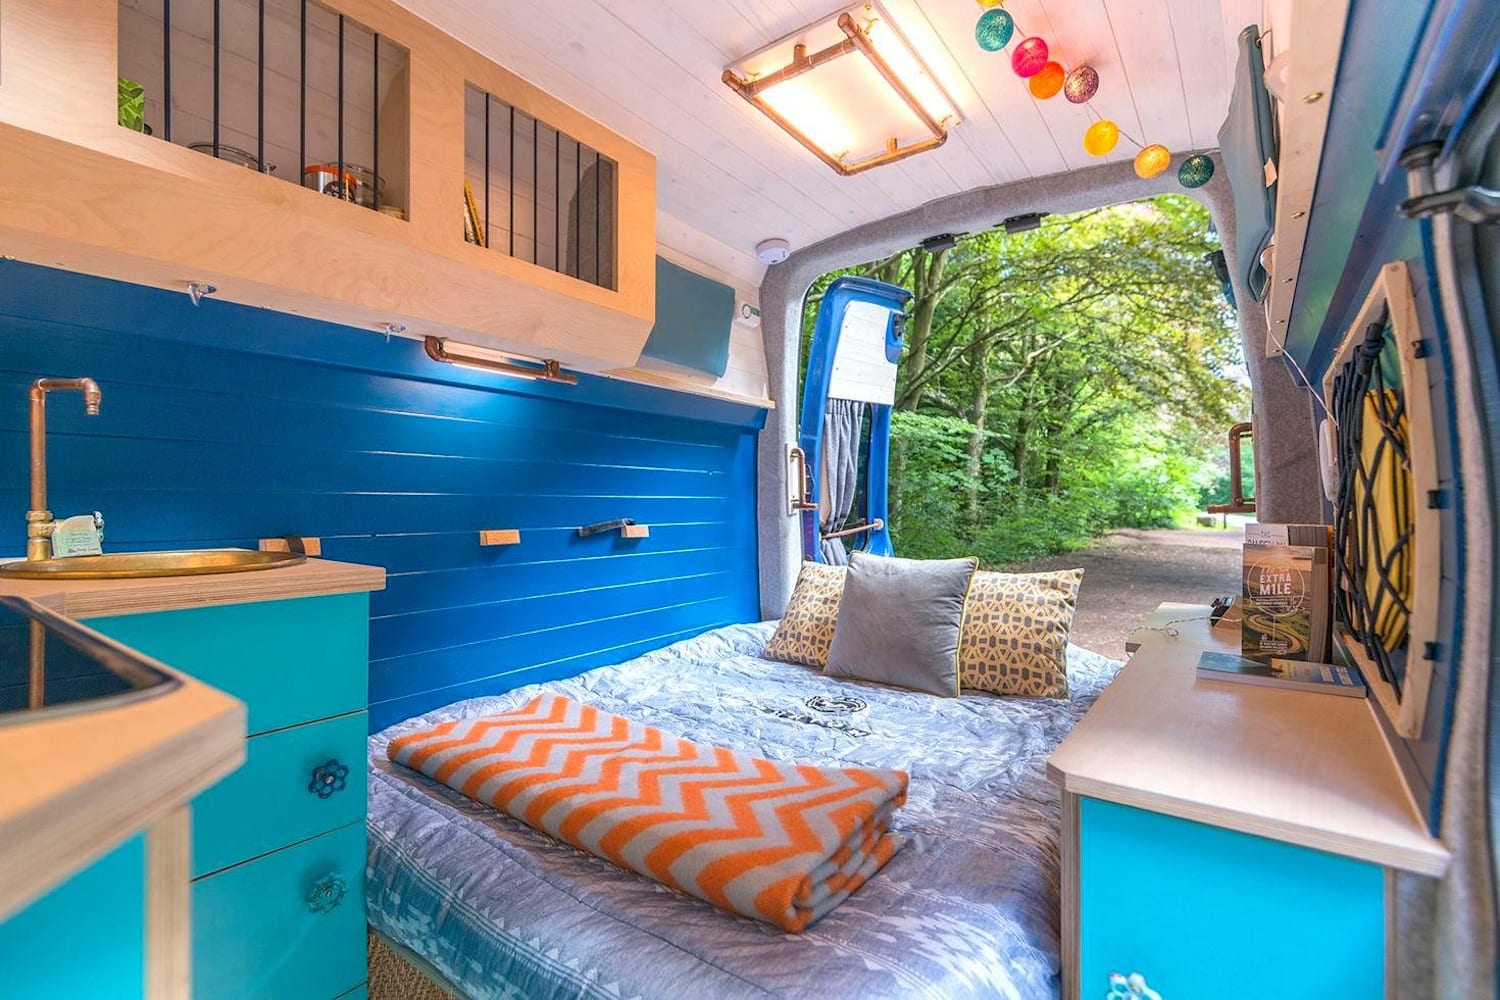 make your own camper van